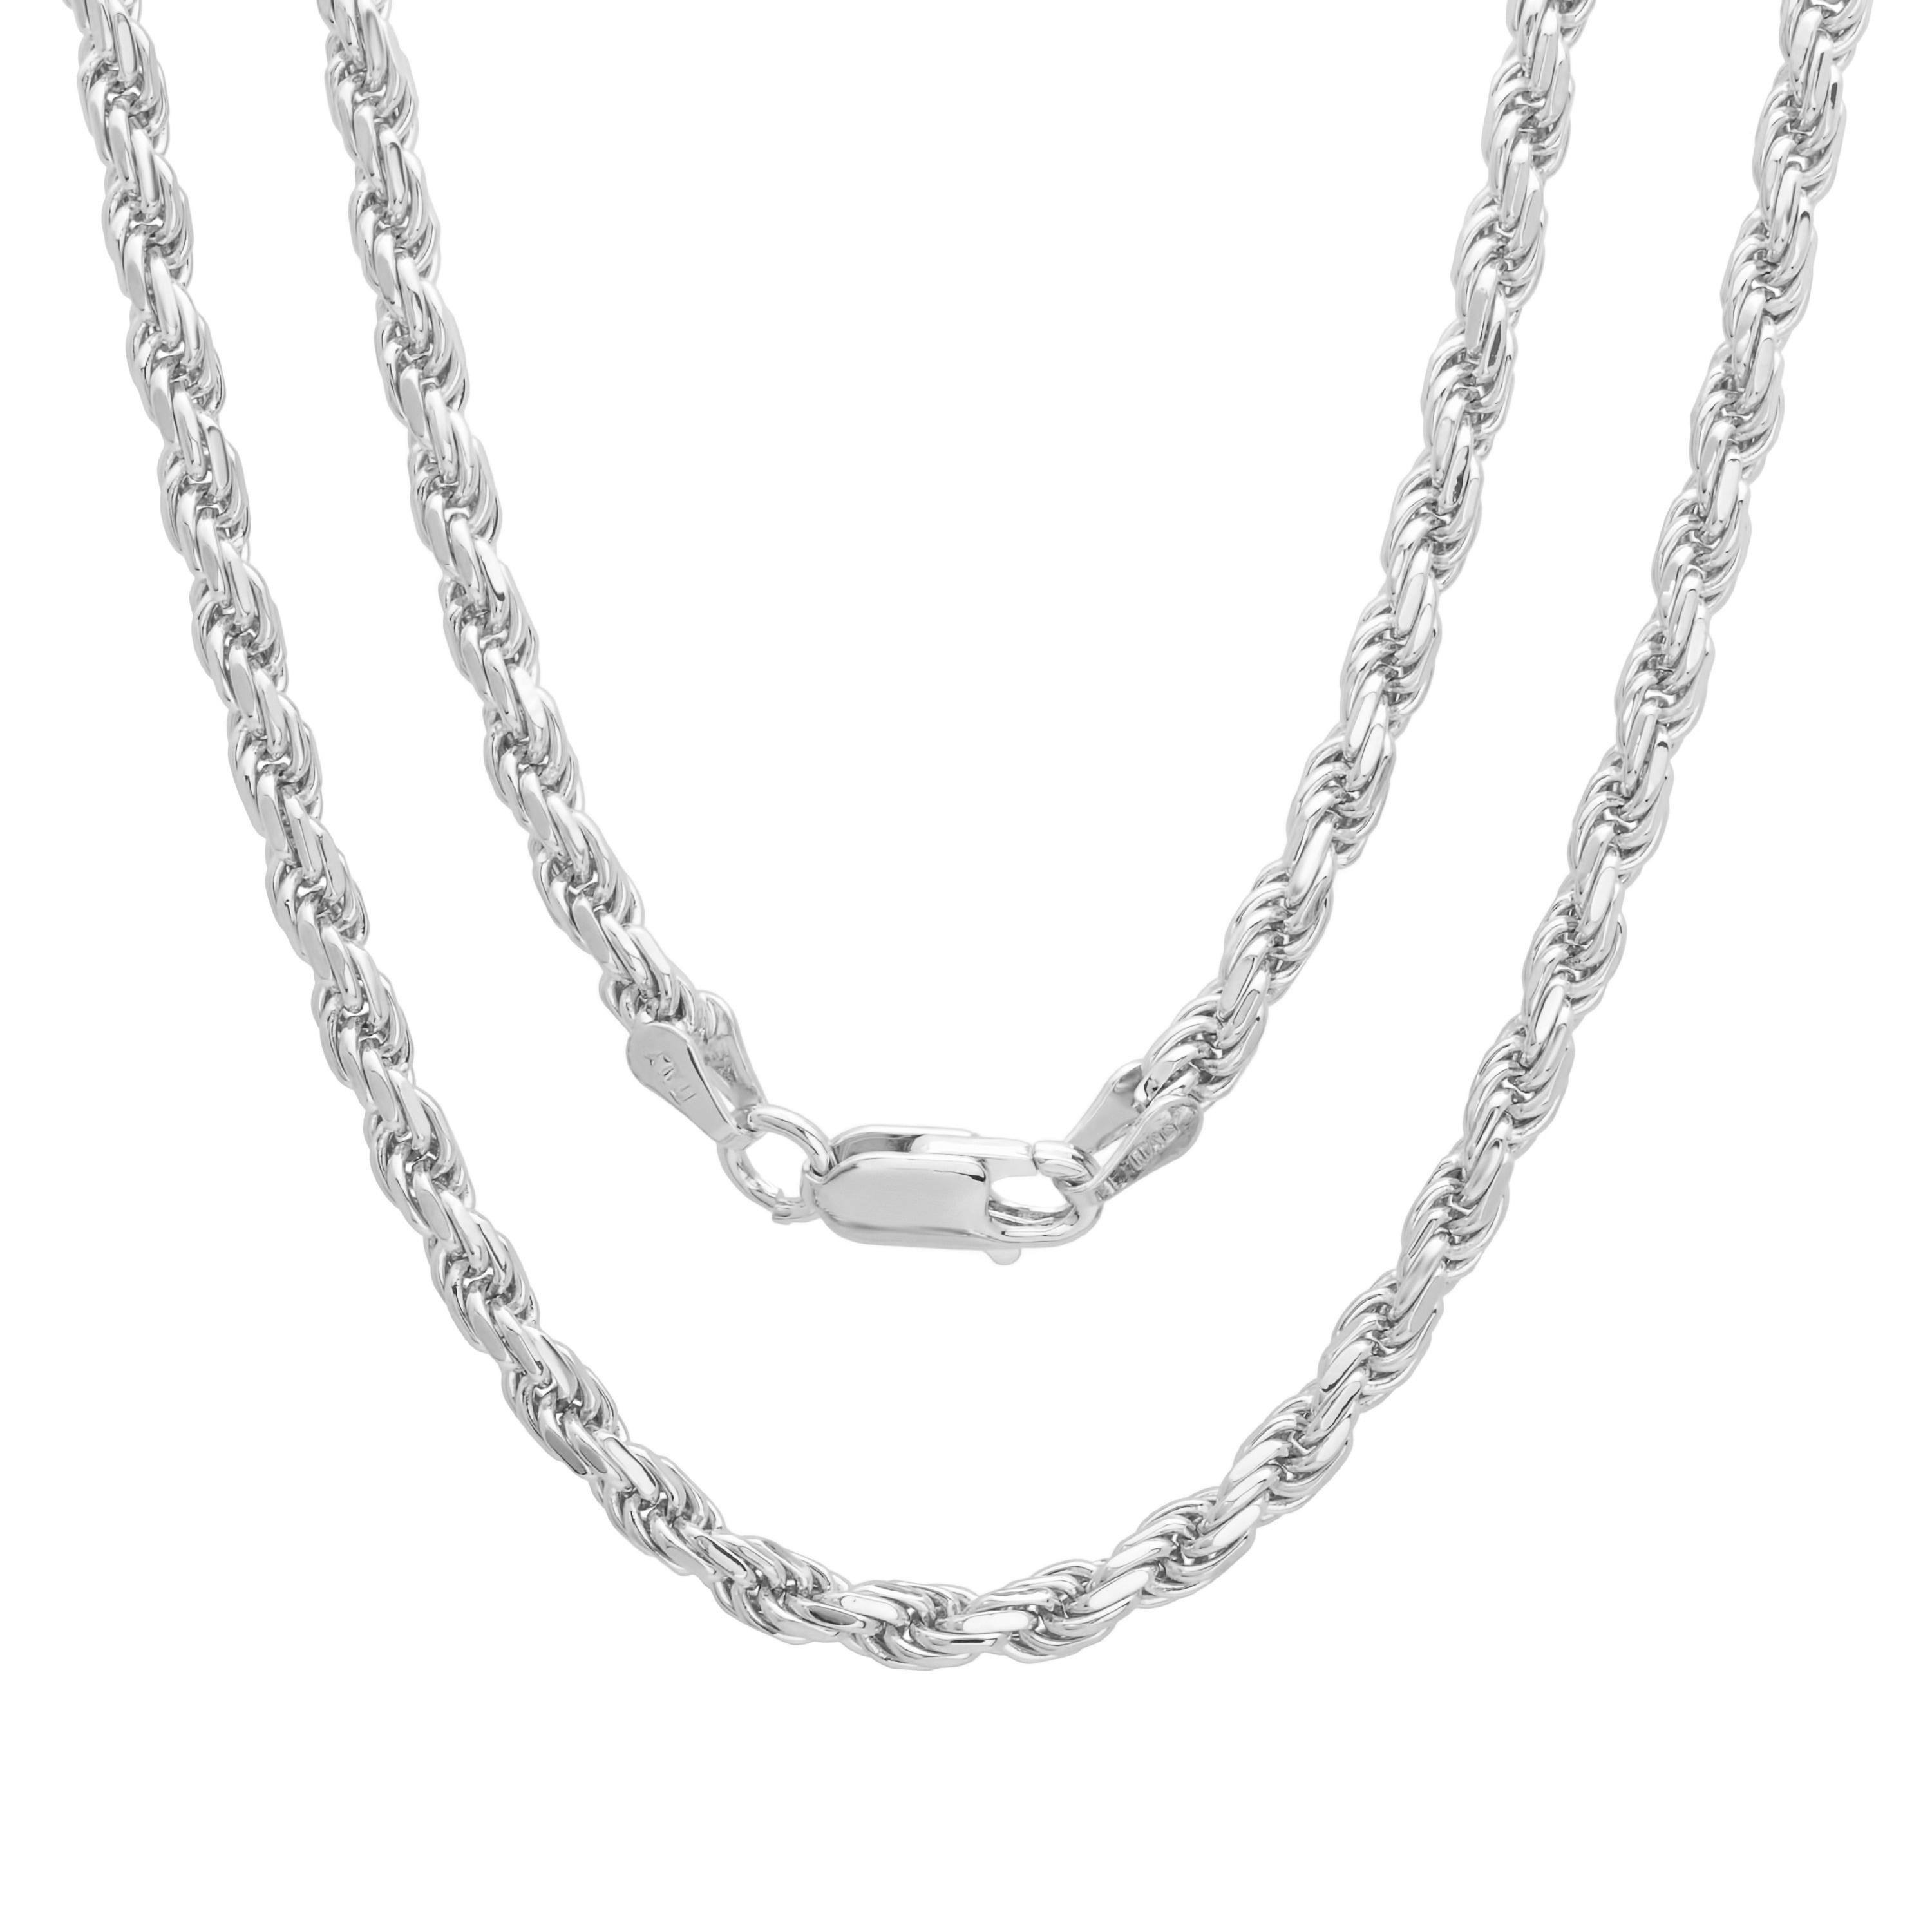 Shop Italian Sterling Silver 3 Mm Diamond Cut Rope Chain 18 24